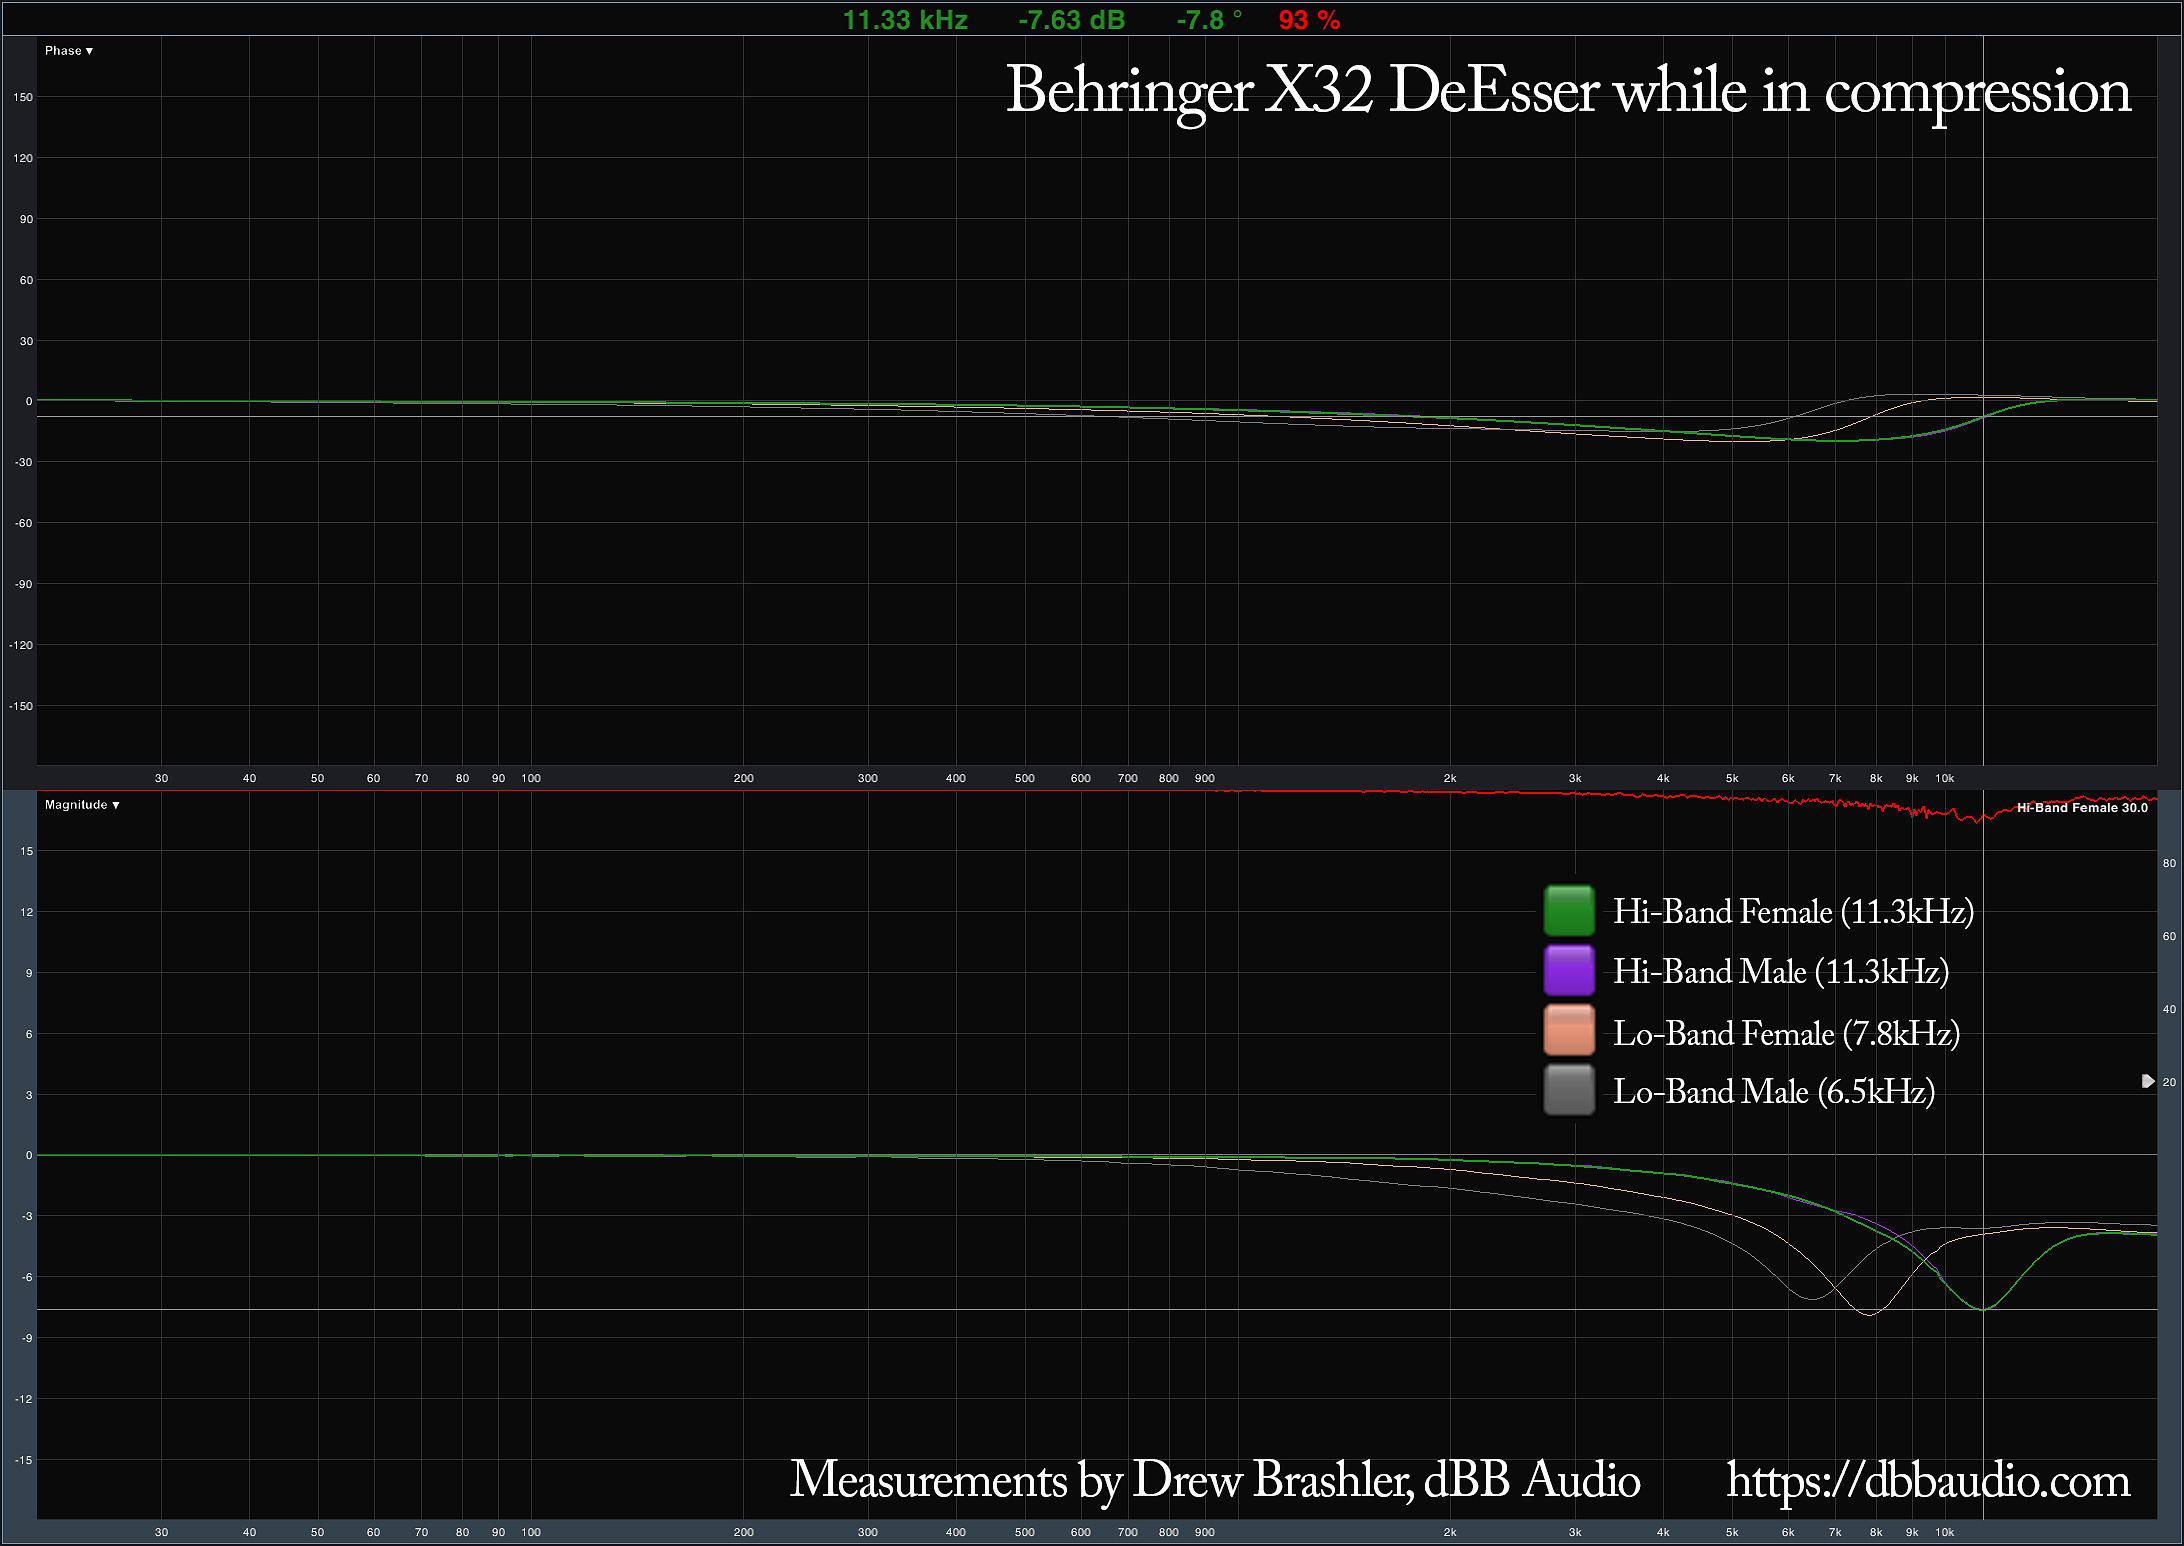 Behringer X32 FX Series DeEsser in Compression